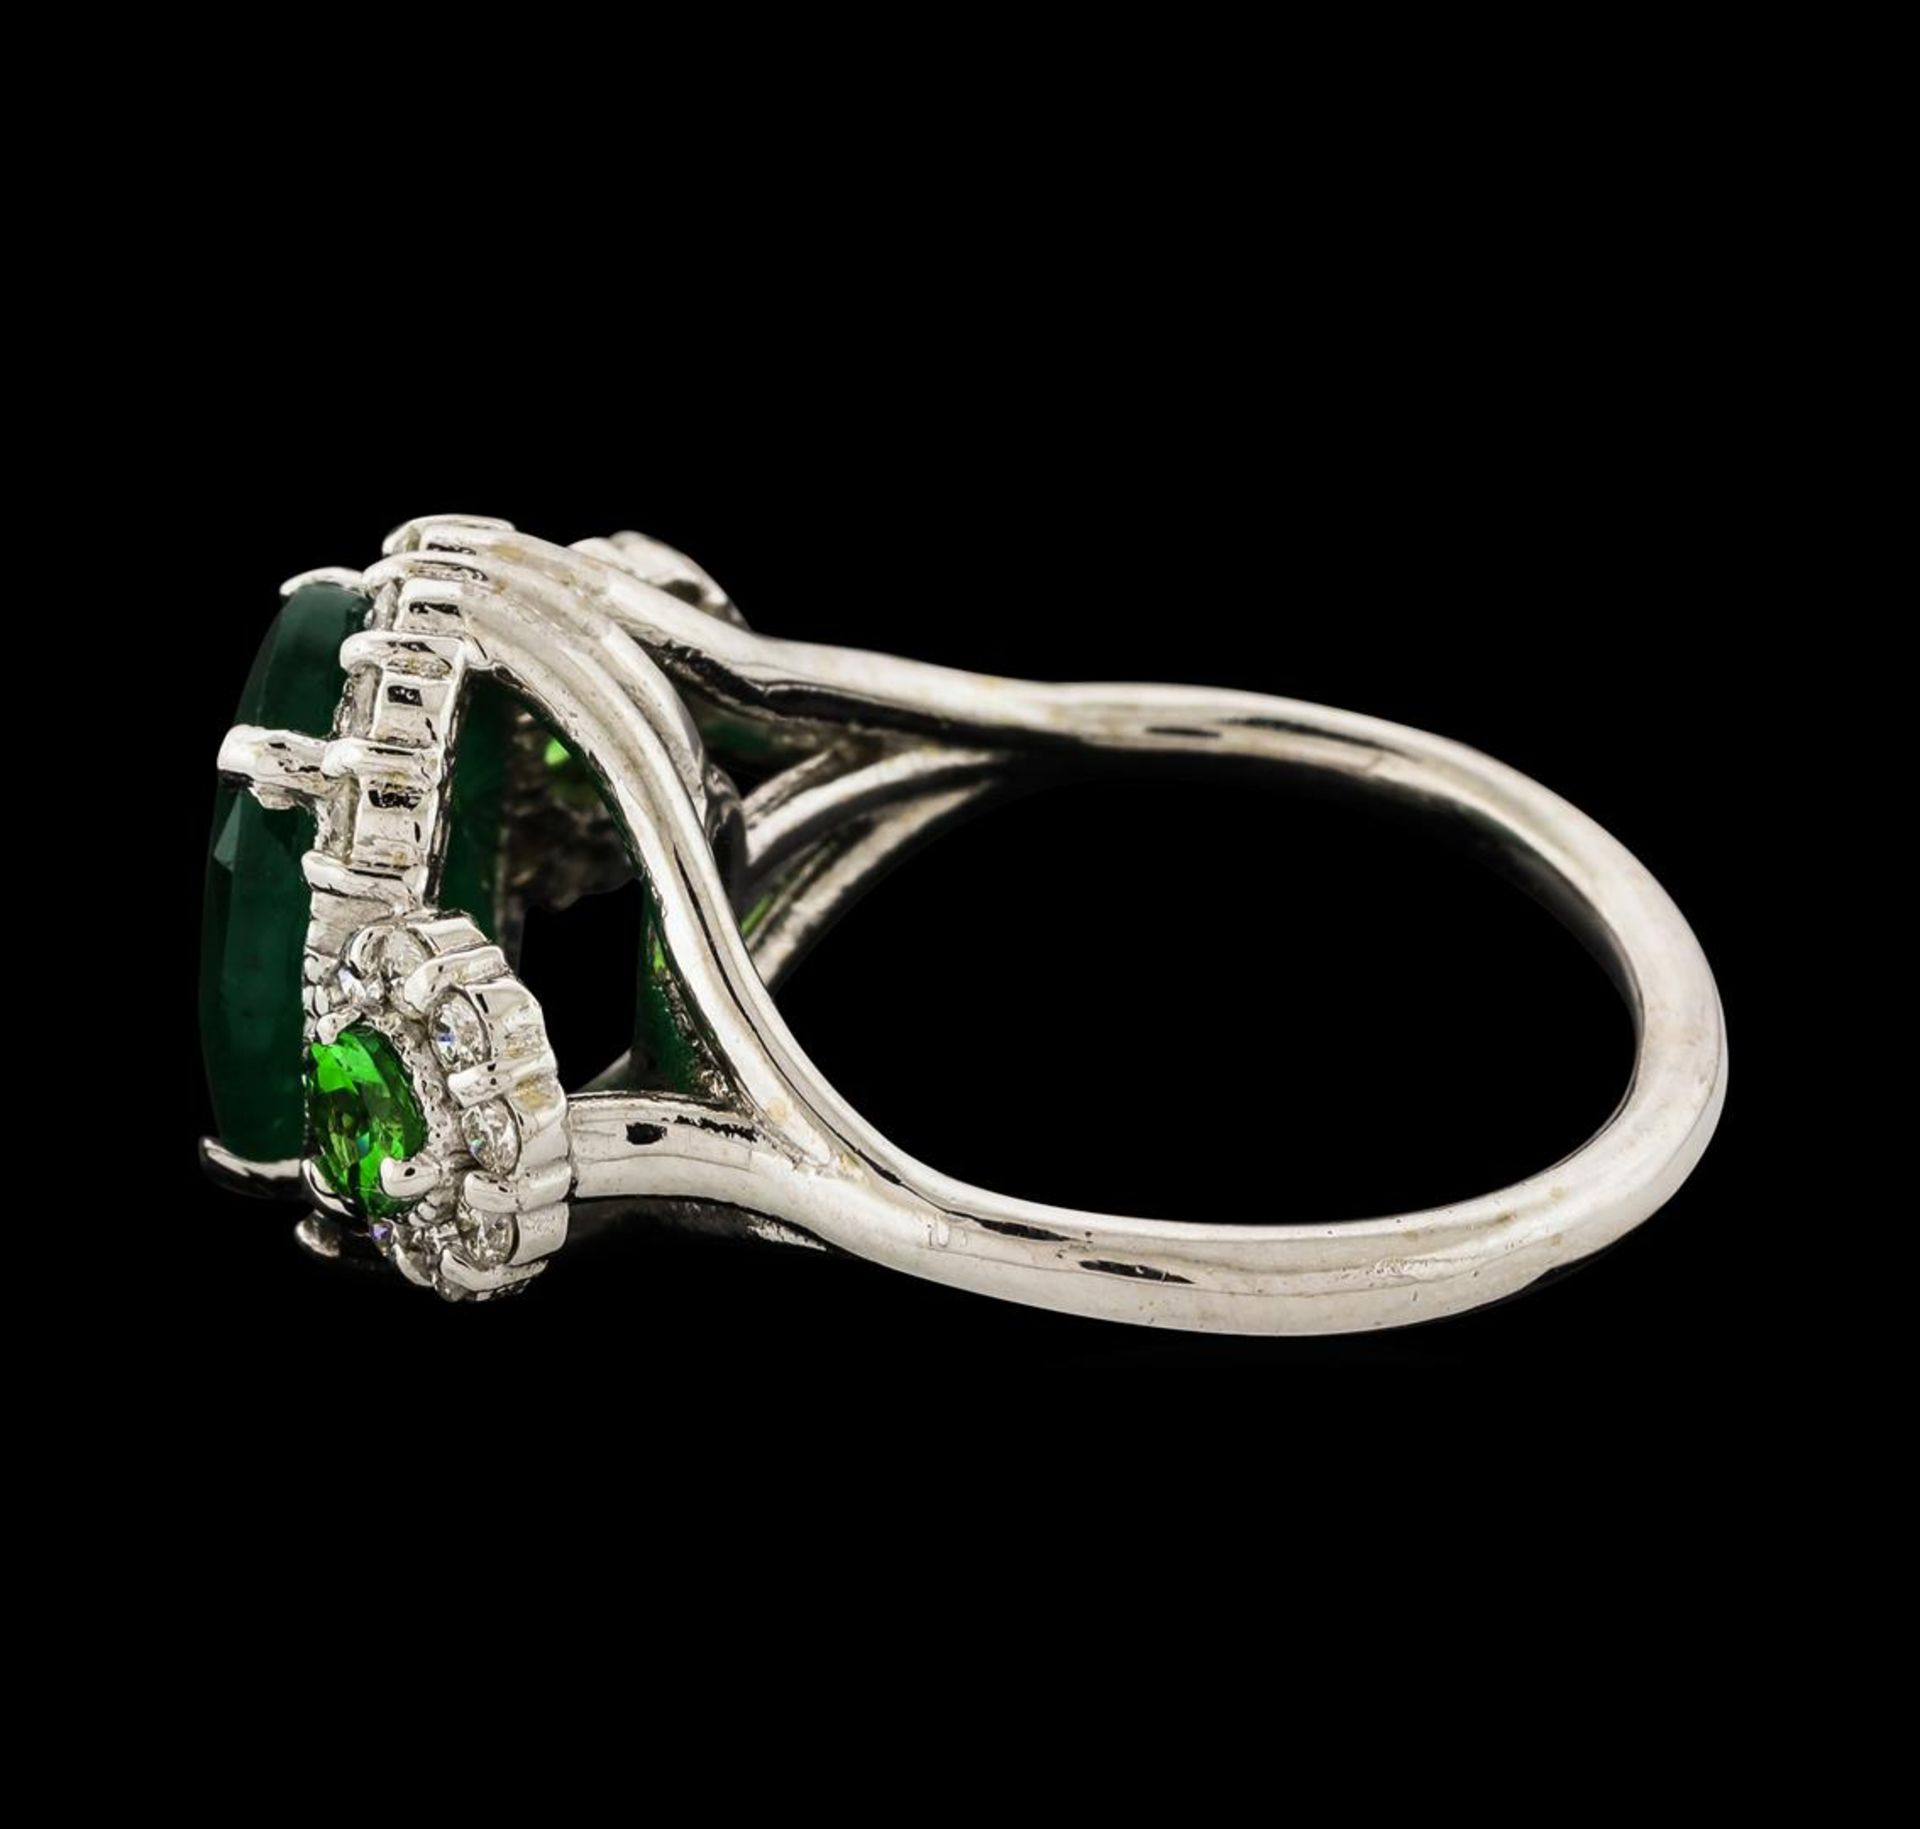 3.88 ctw Emerald, Tsavorite and Diamond Ring - 14KT White Gold - Image 4 of 6